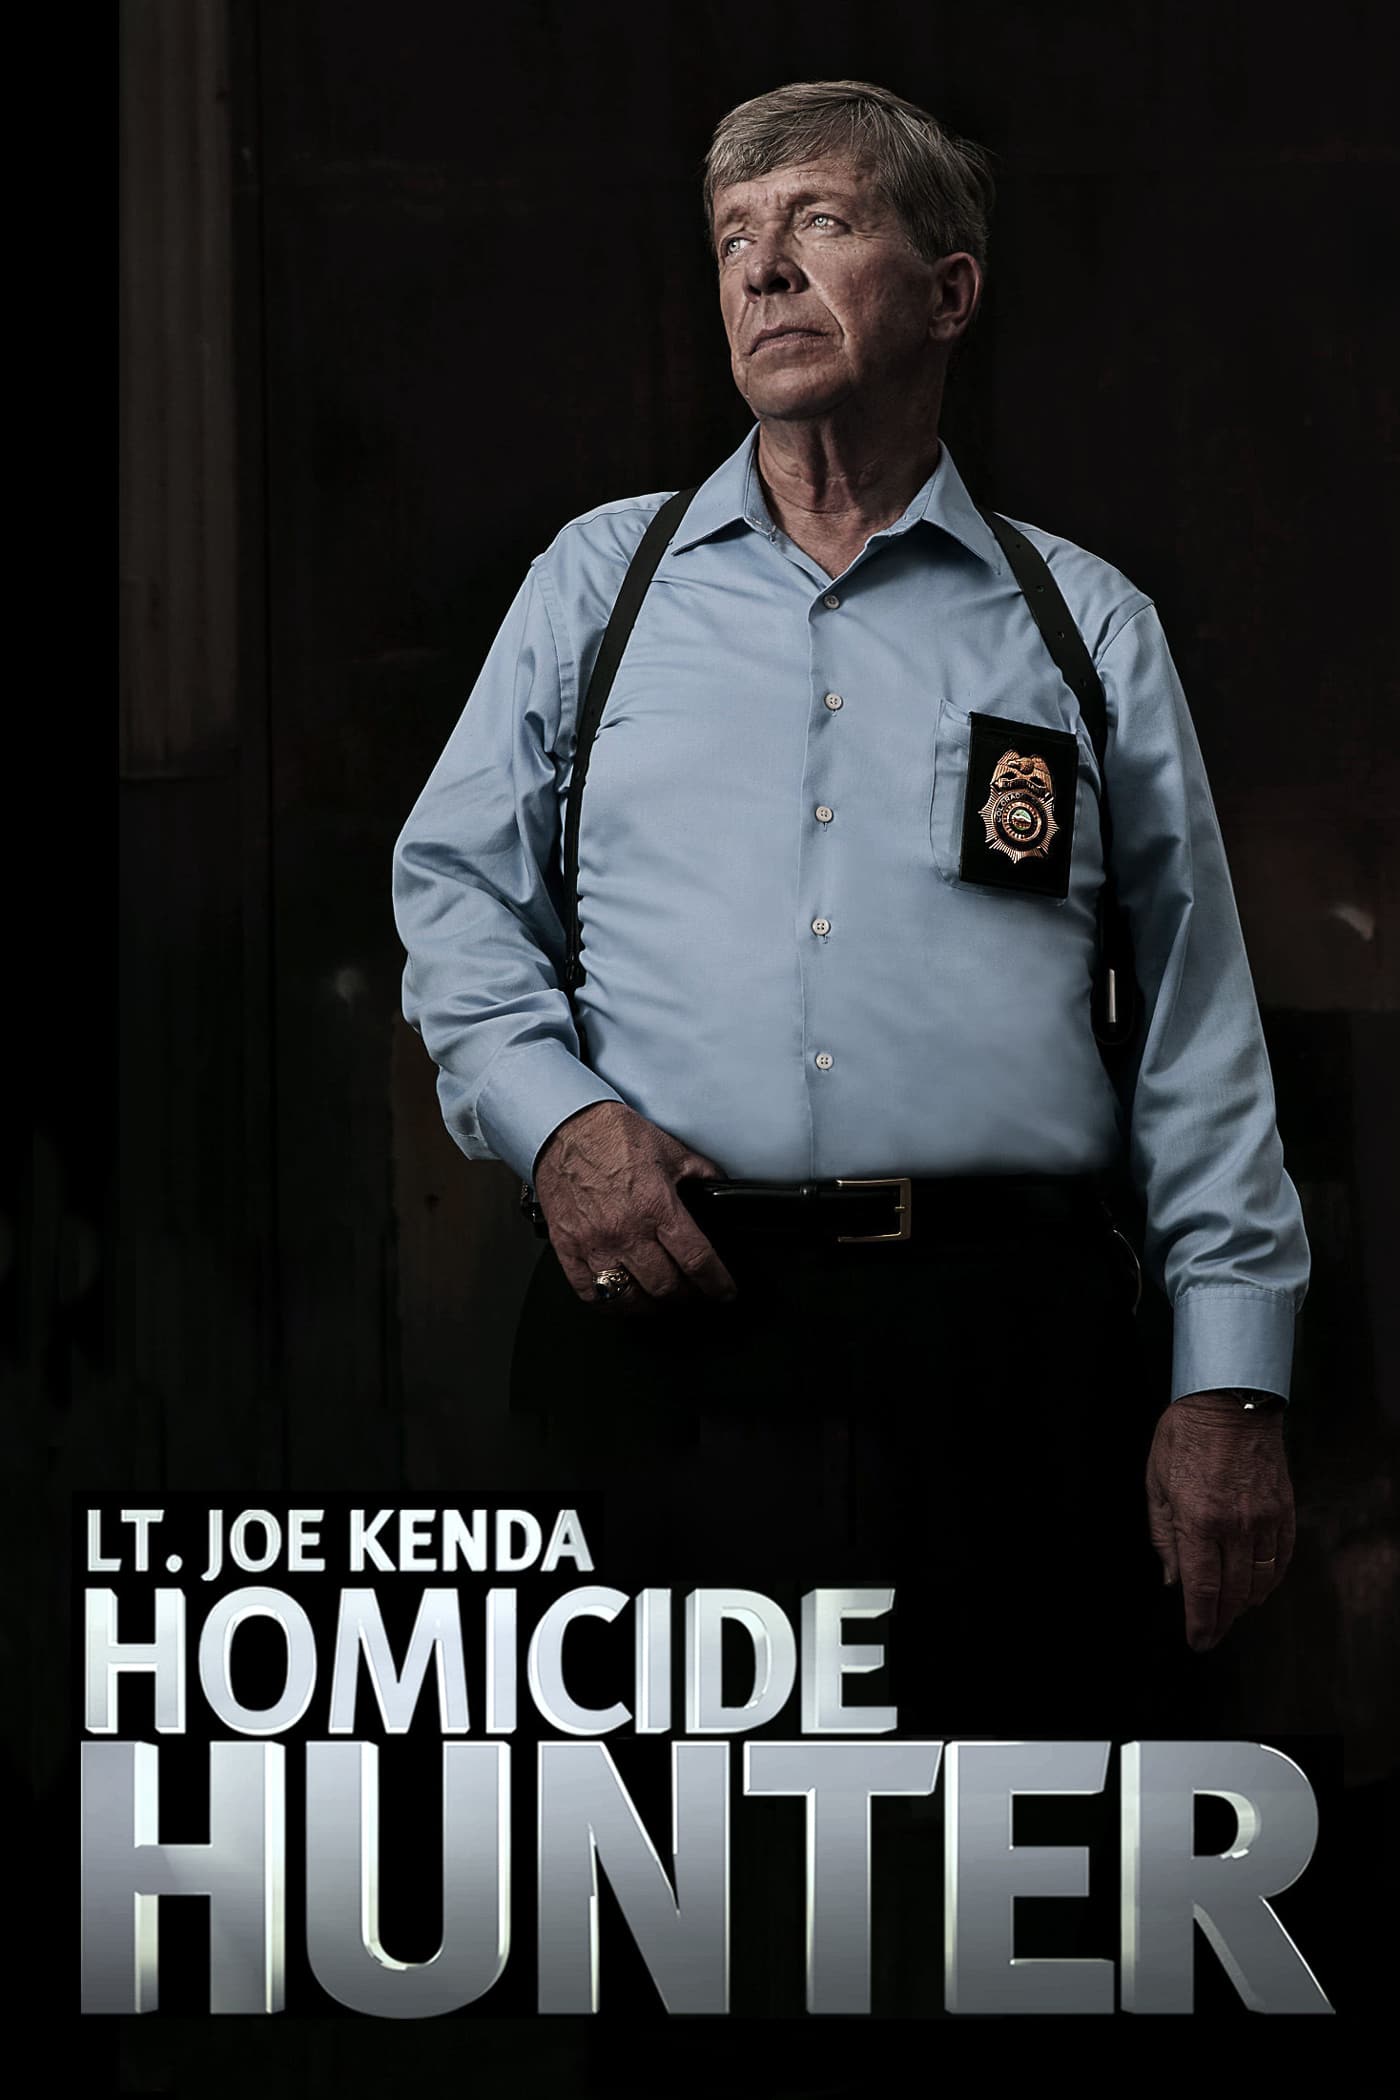 Homocide Hunter Lt Joe Kenda.jpg